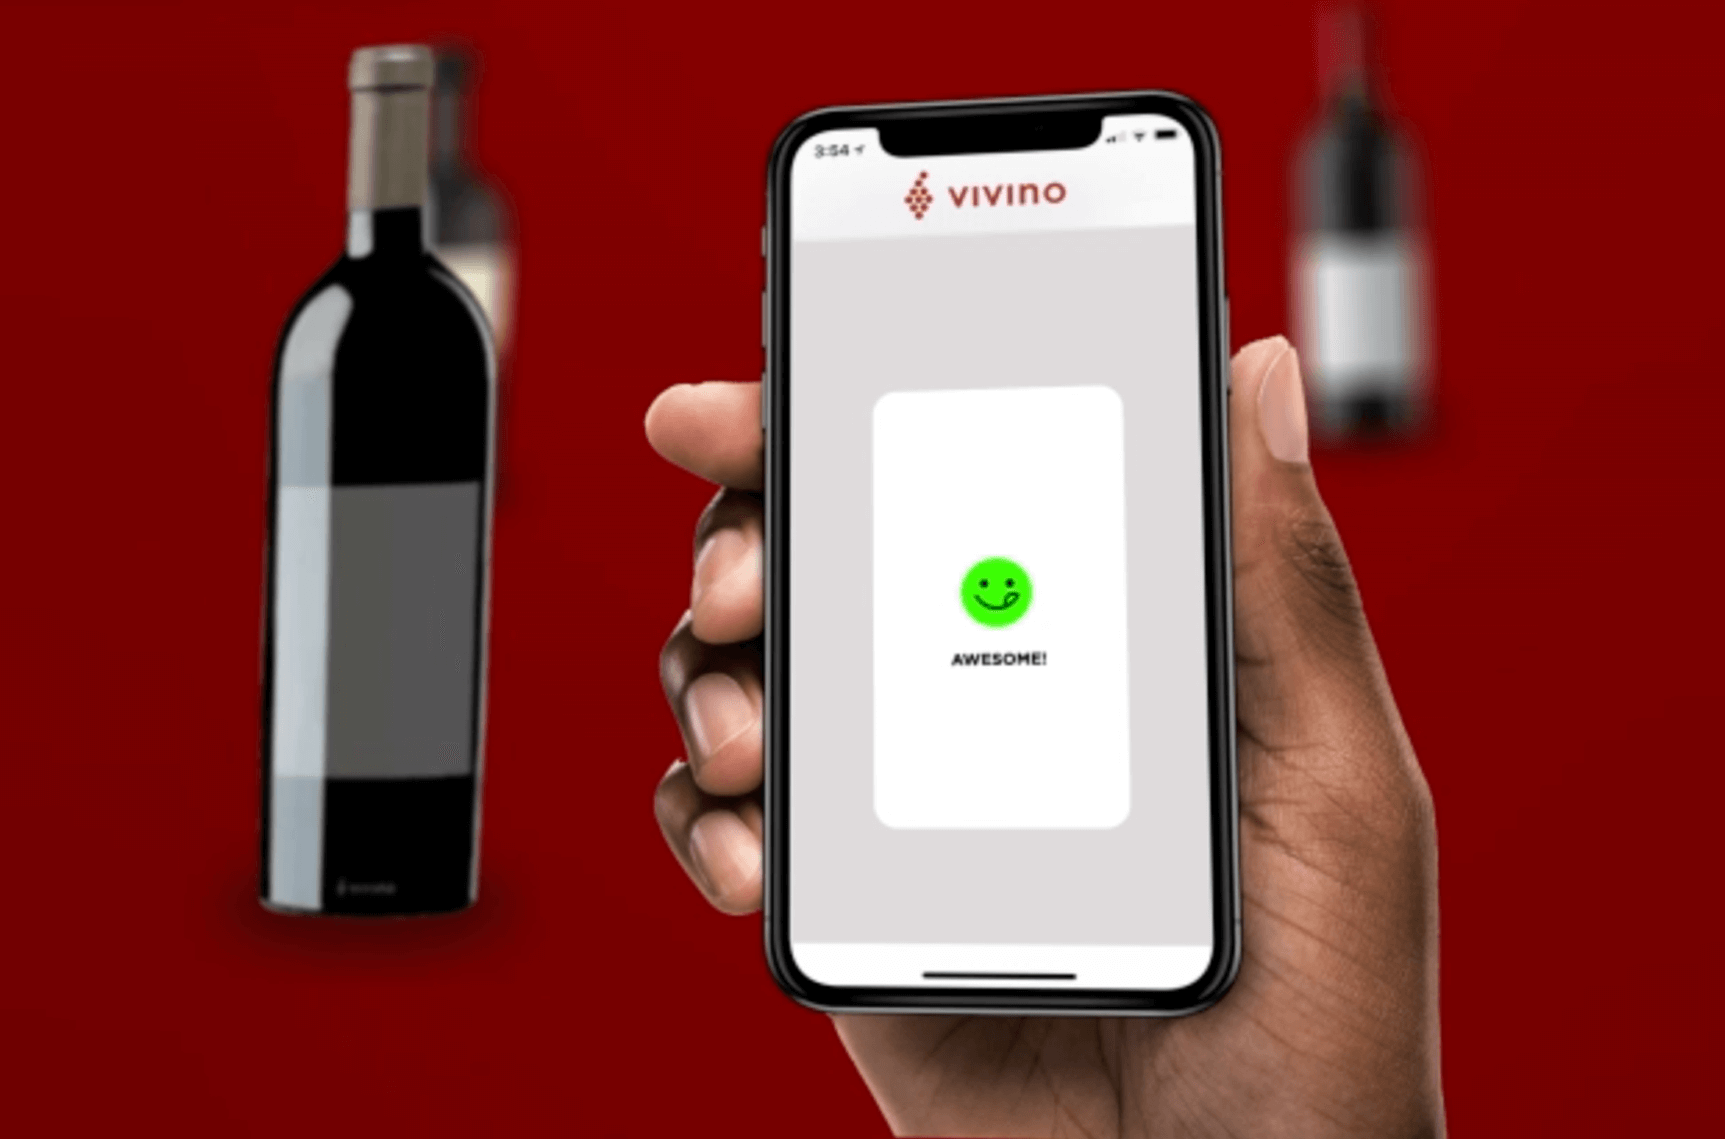 Vivino App: A Digital Wine Experience